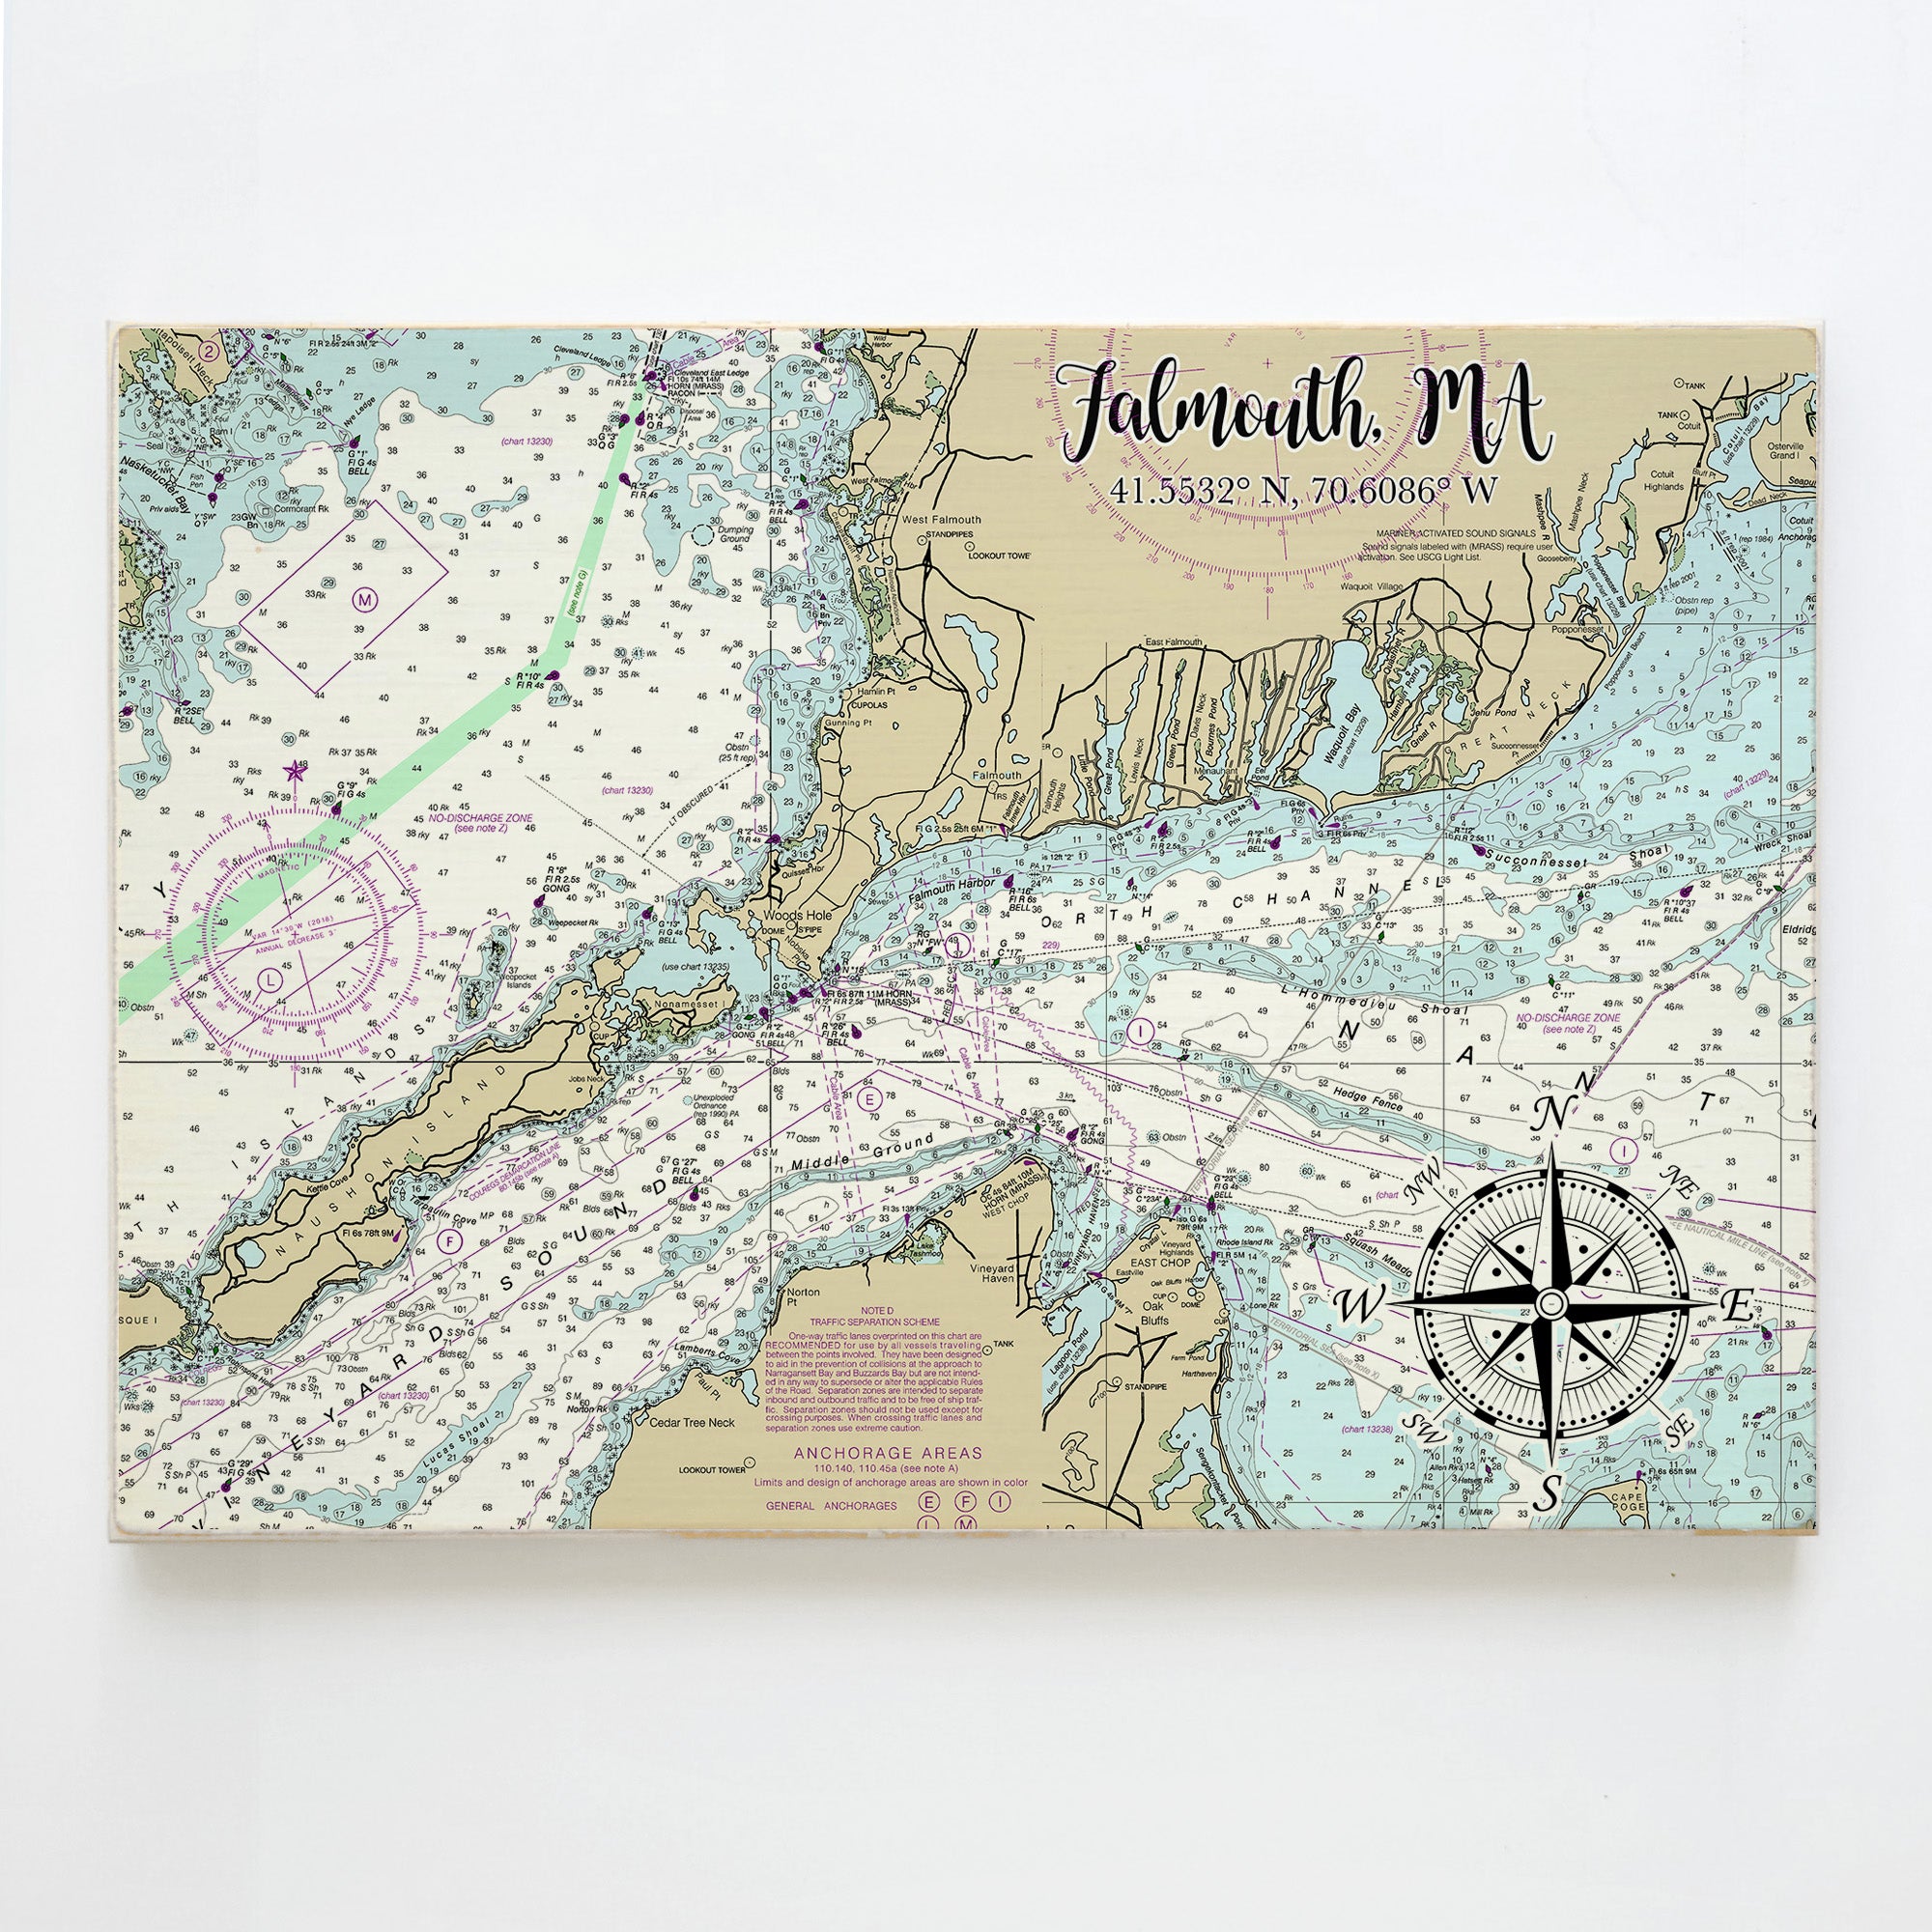 Falmouth, MA Plank Map